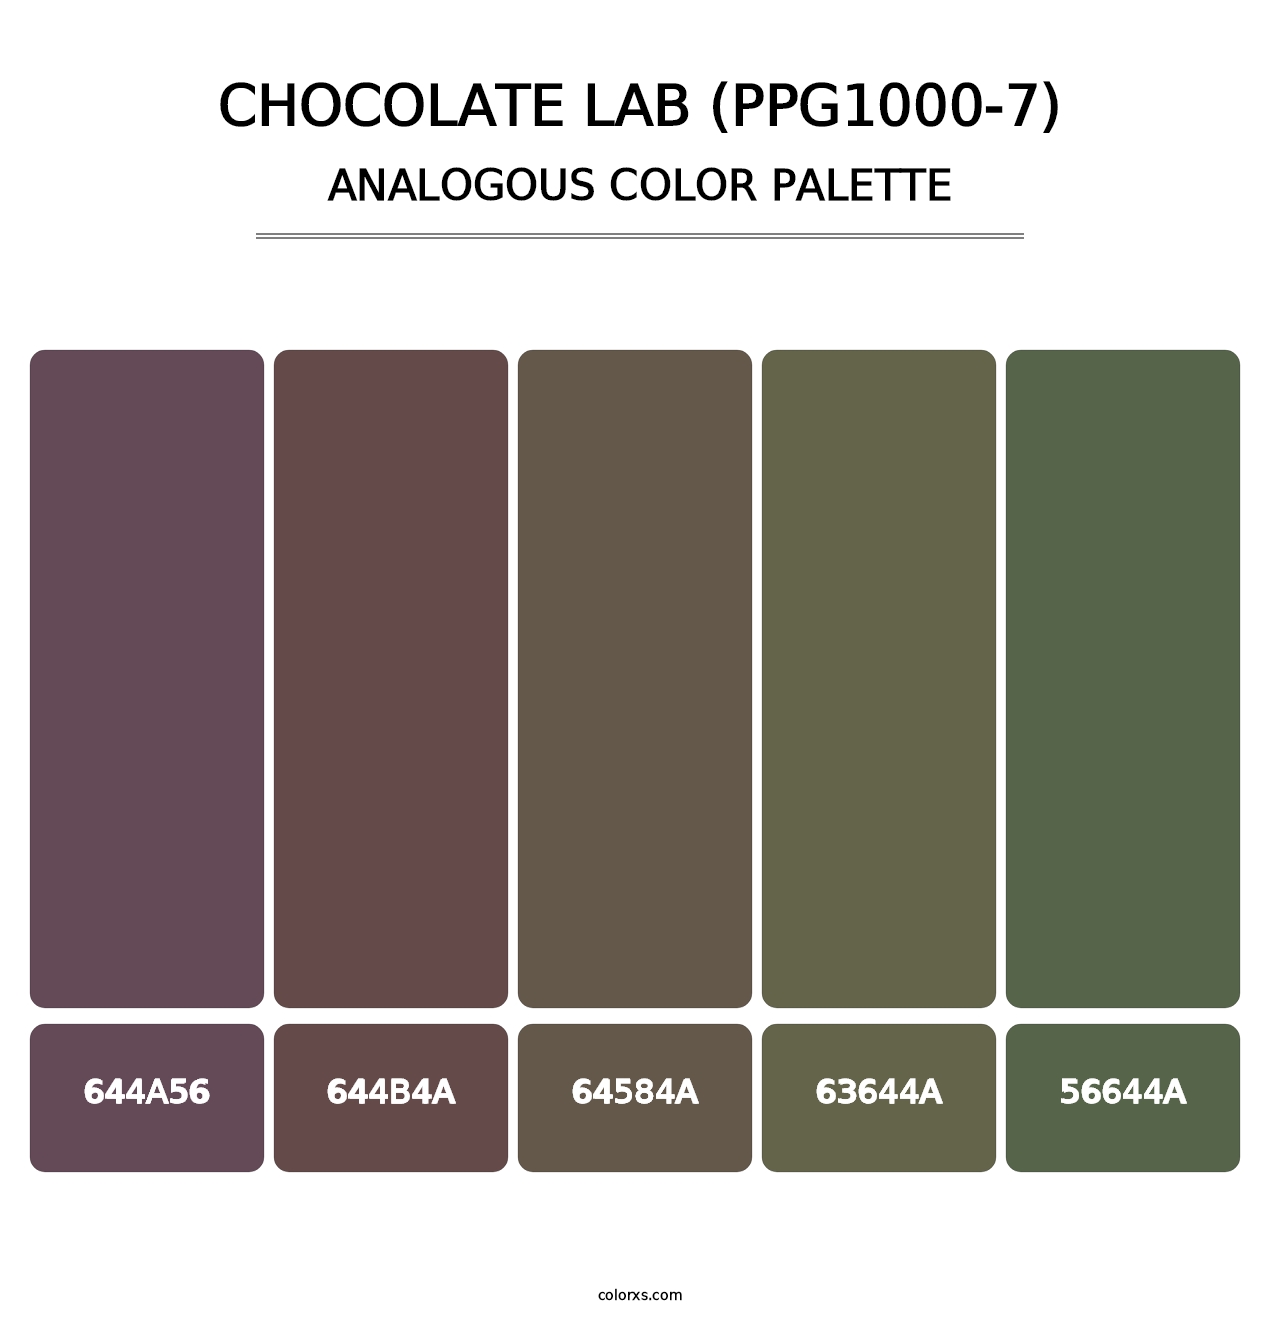 Chocolate Lab (PPG1000-7) - Analogous Color Palette